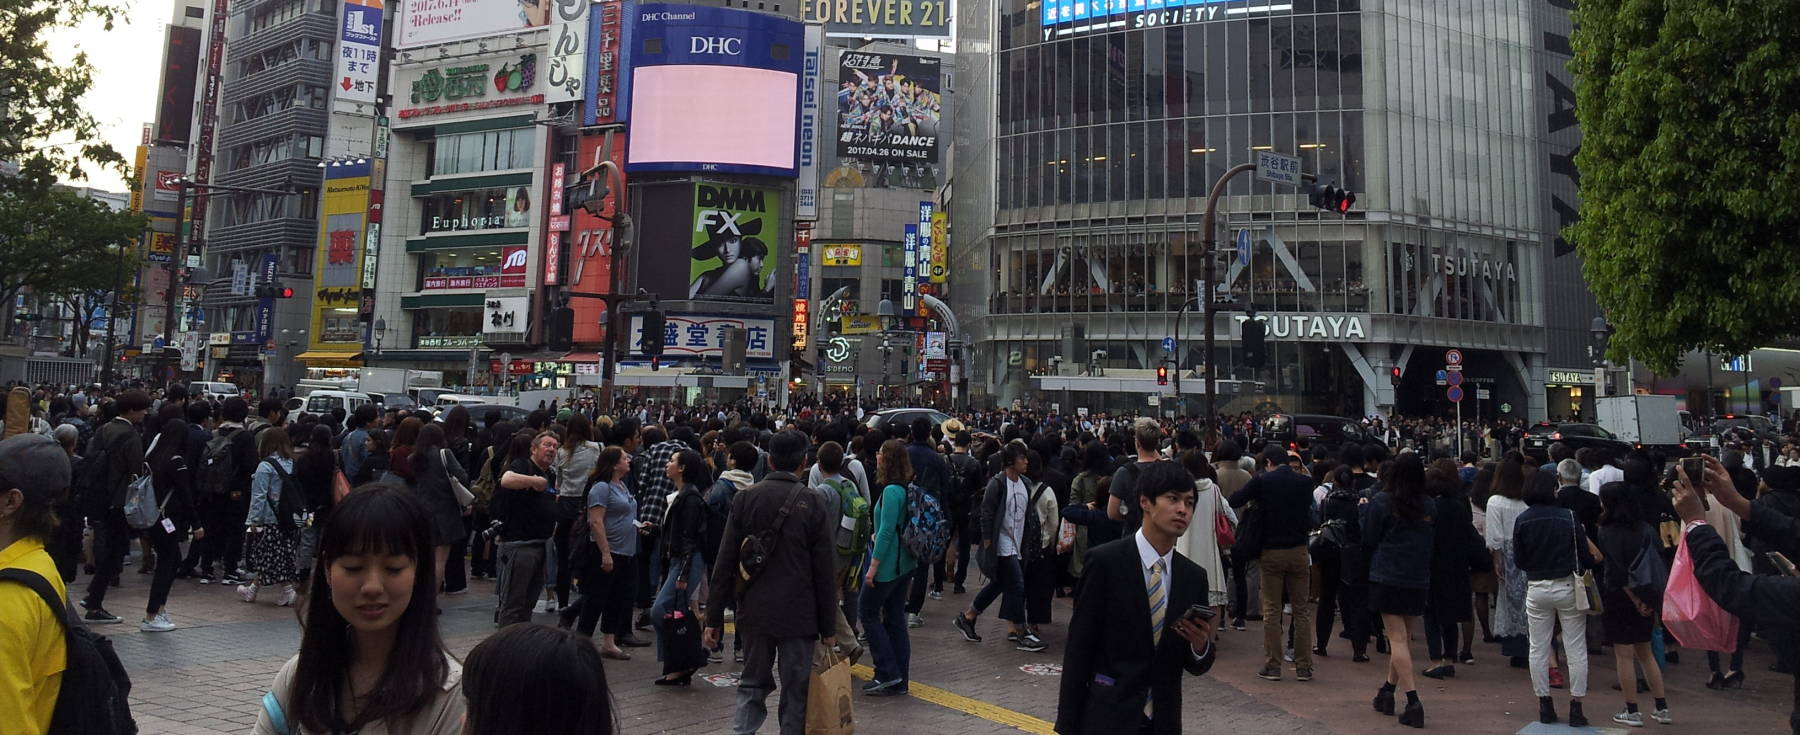 Thousands of people around Shibuya Crossing in Tōkyō.